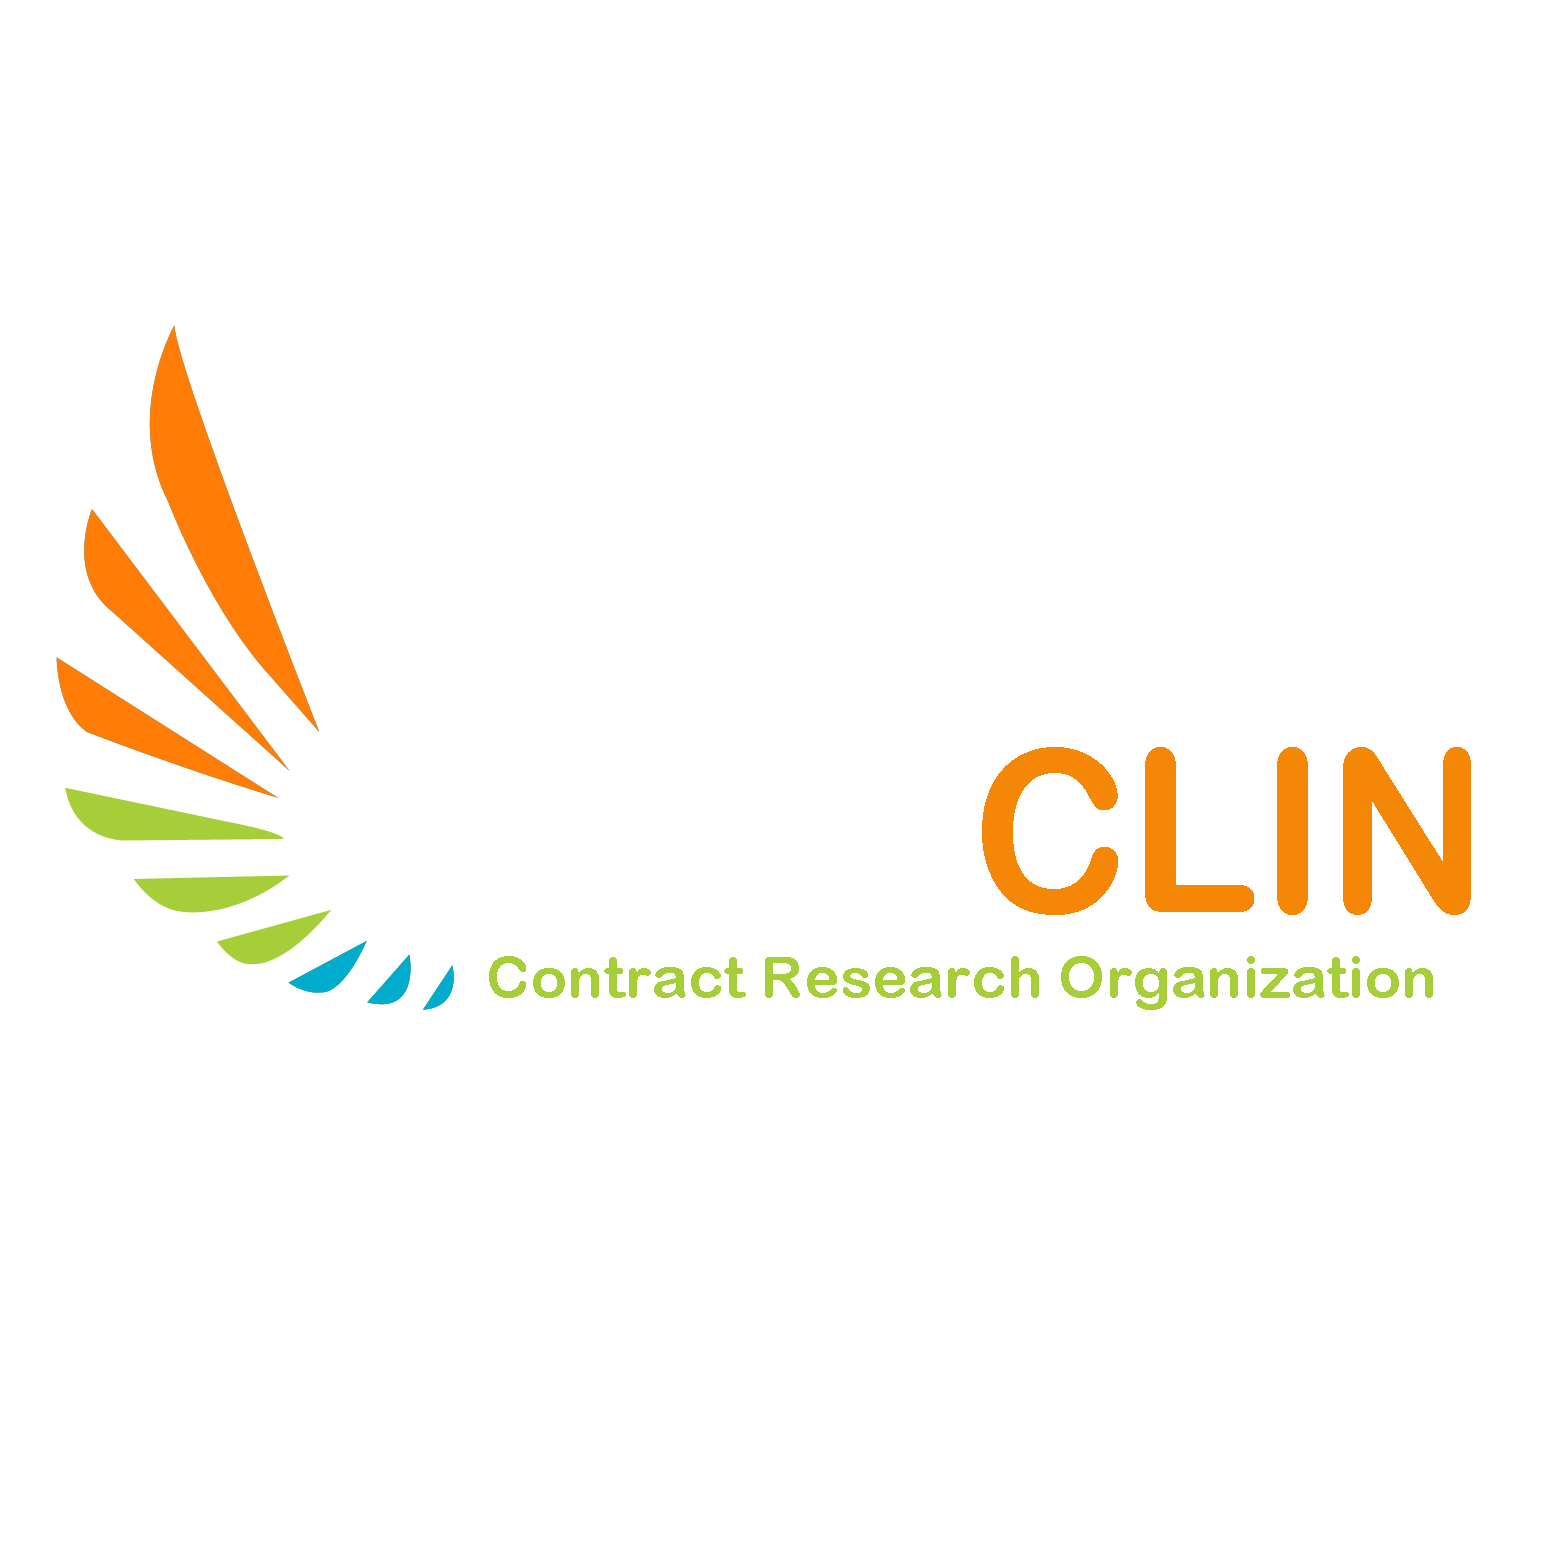 SevoClin